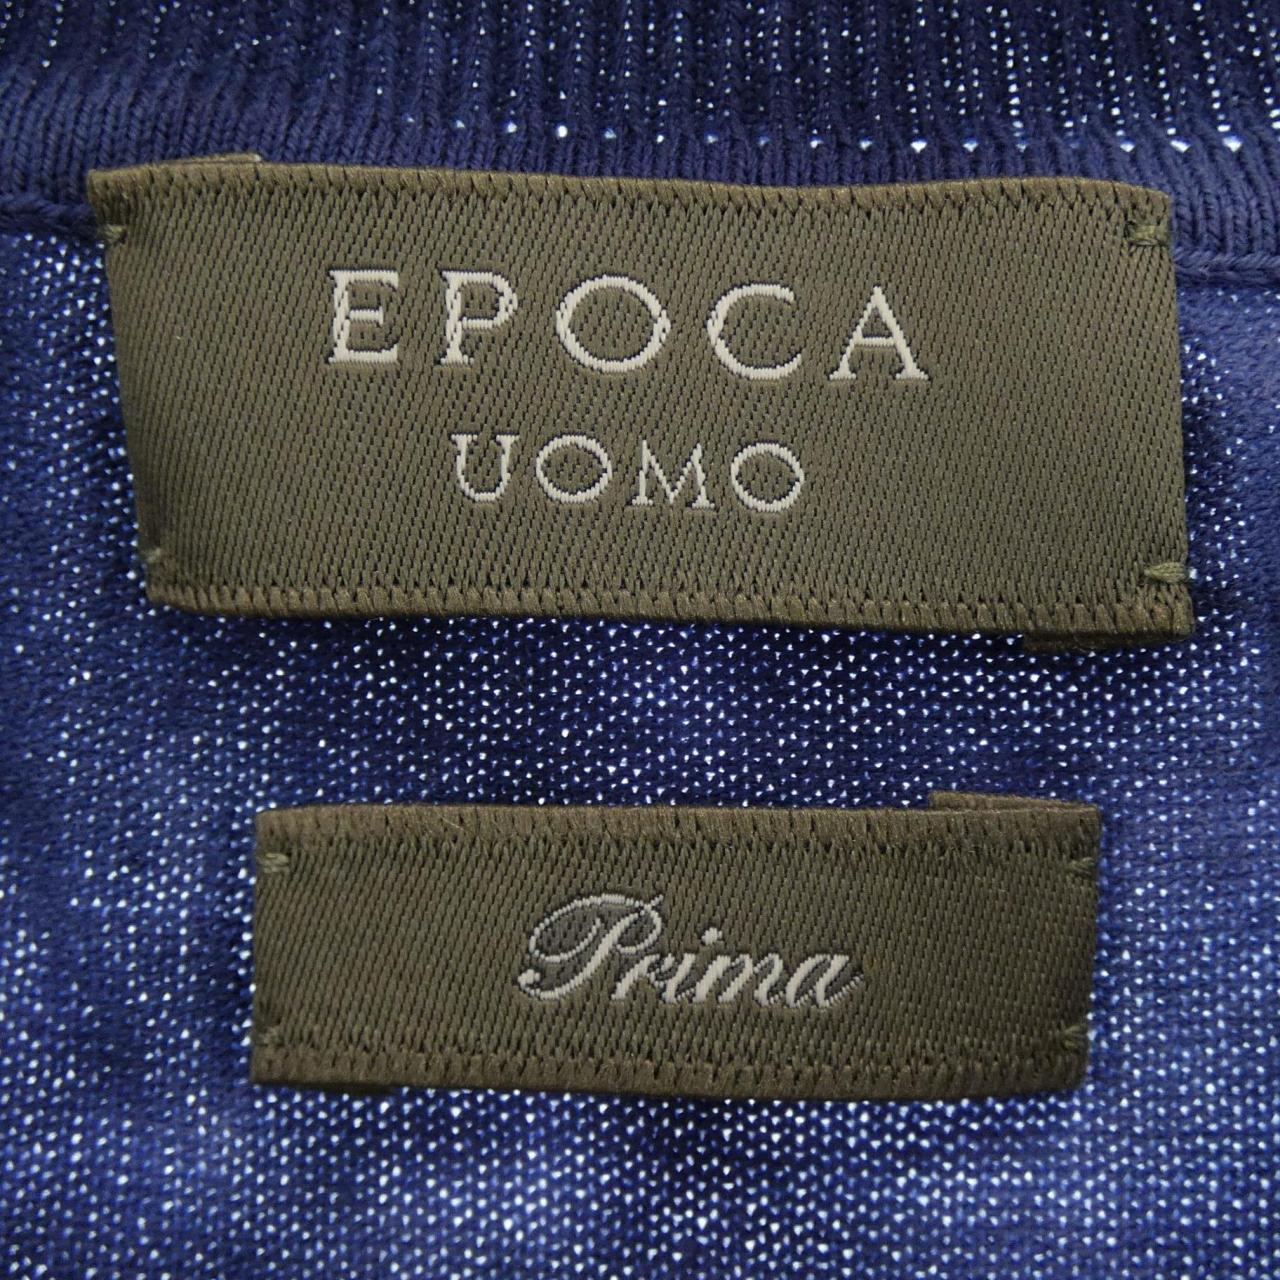 EPOCA UOMO knit